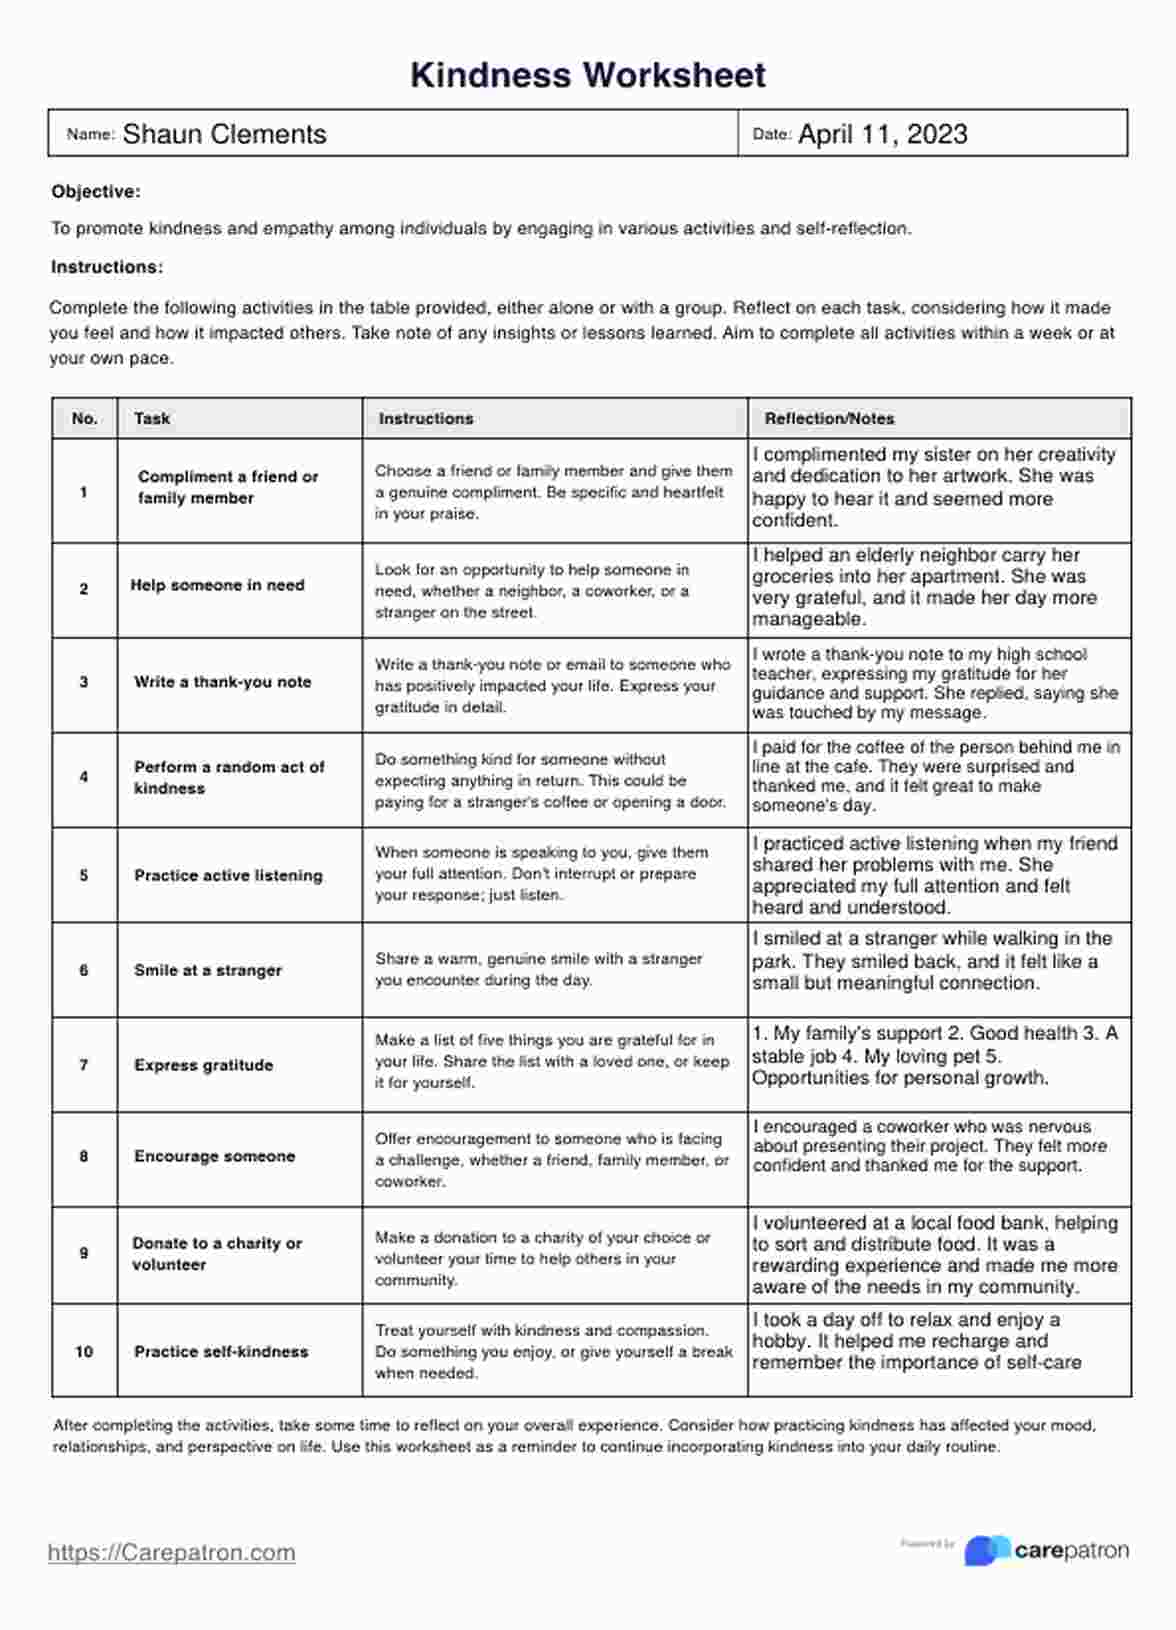 Kindness Worksheet PDF Example